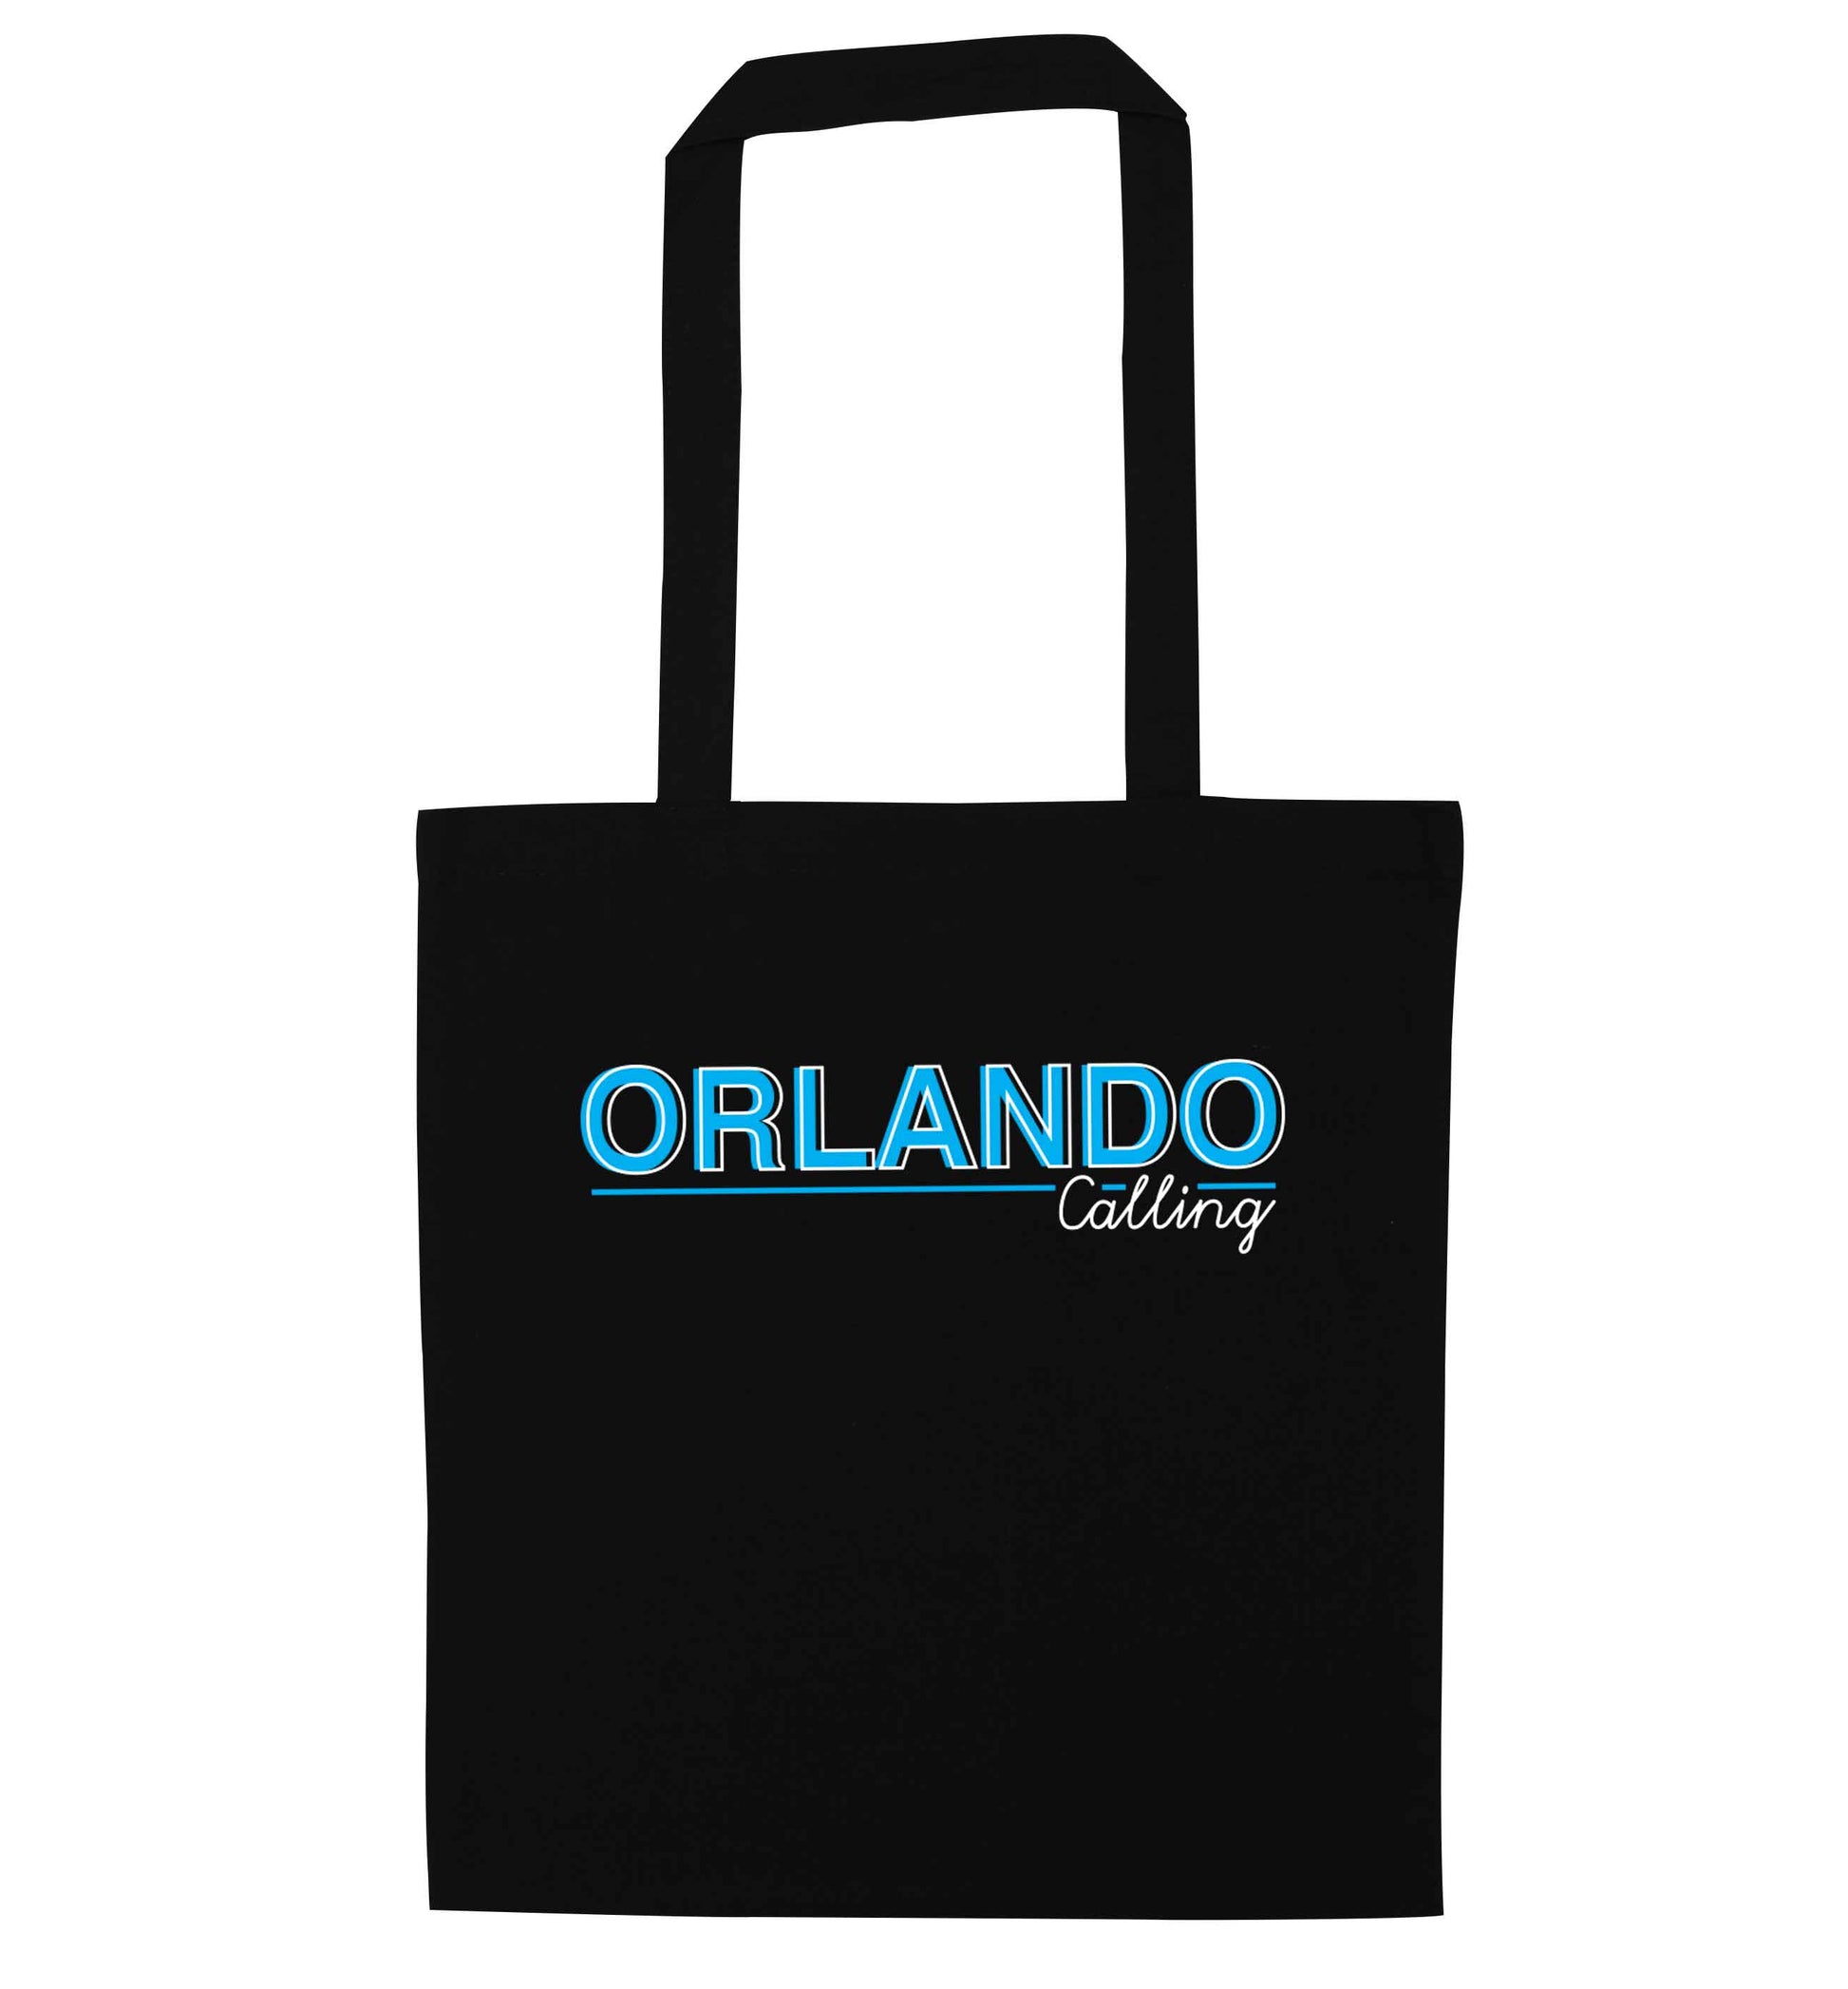 Orlando calling black tote bag